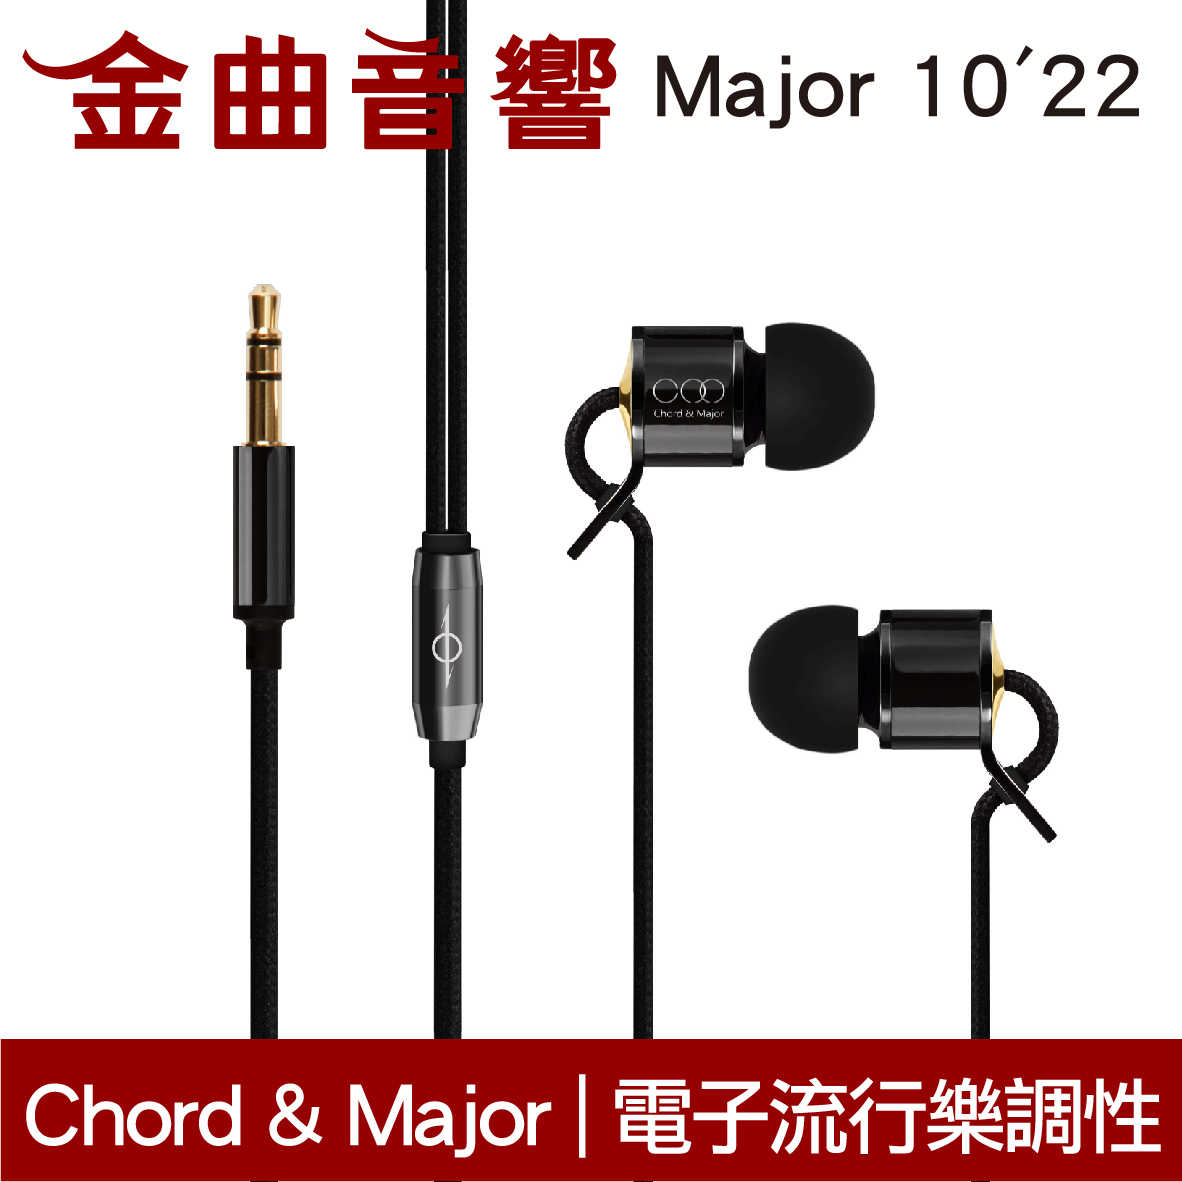 Chord & Major Major 10’22 電子流行樂調性 十週年 線控 耳道式 耳機 | 金曲音響